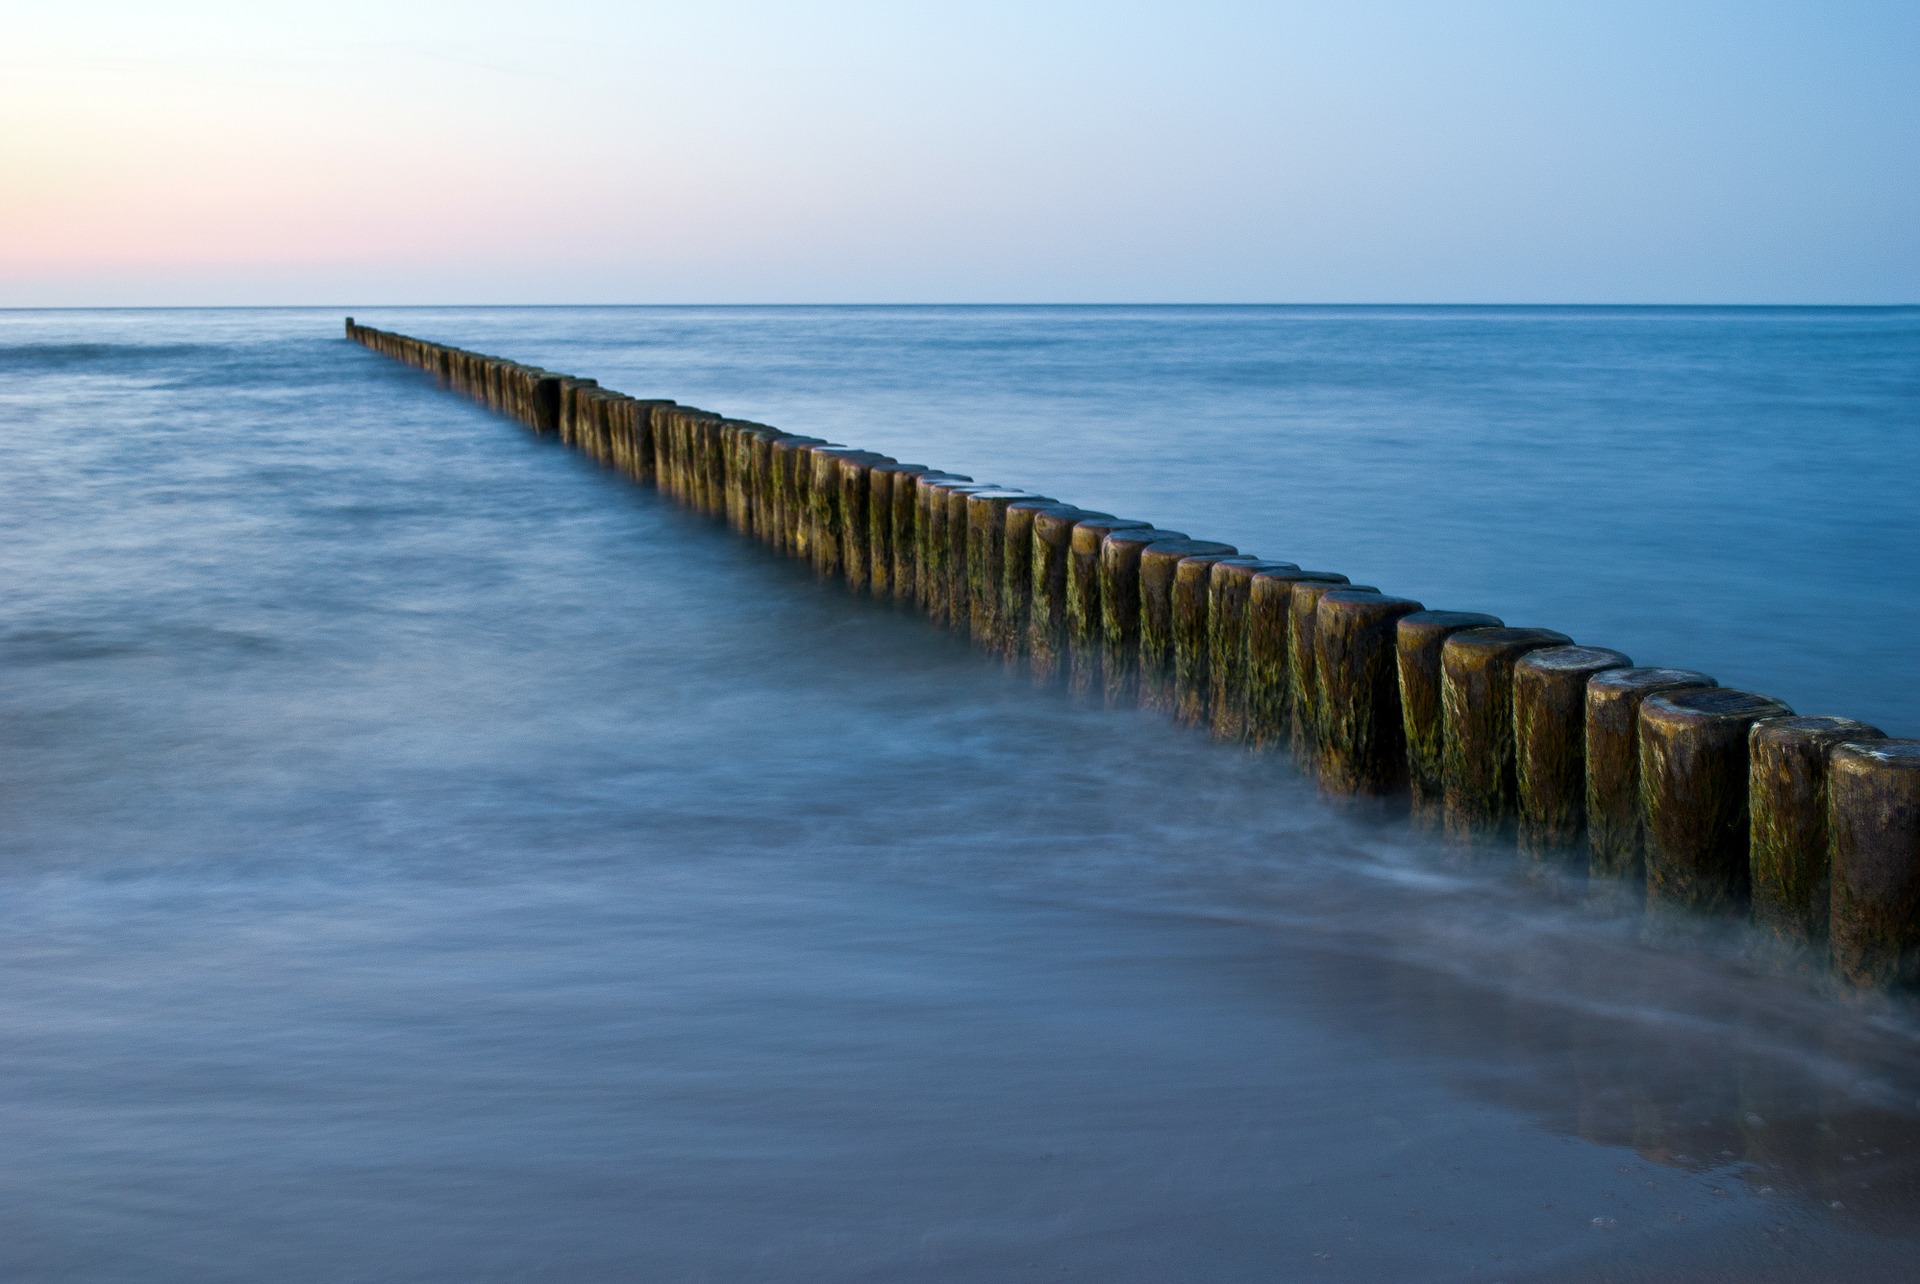 https://pixabay.com/photos/to-stage-sea-baltic-sea-339252/